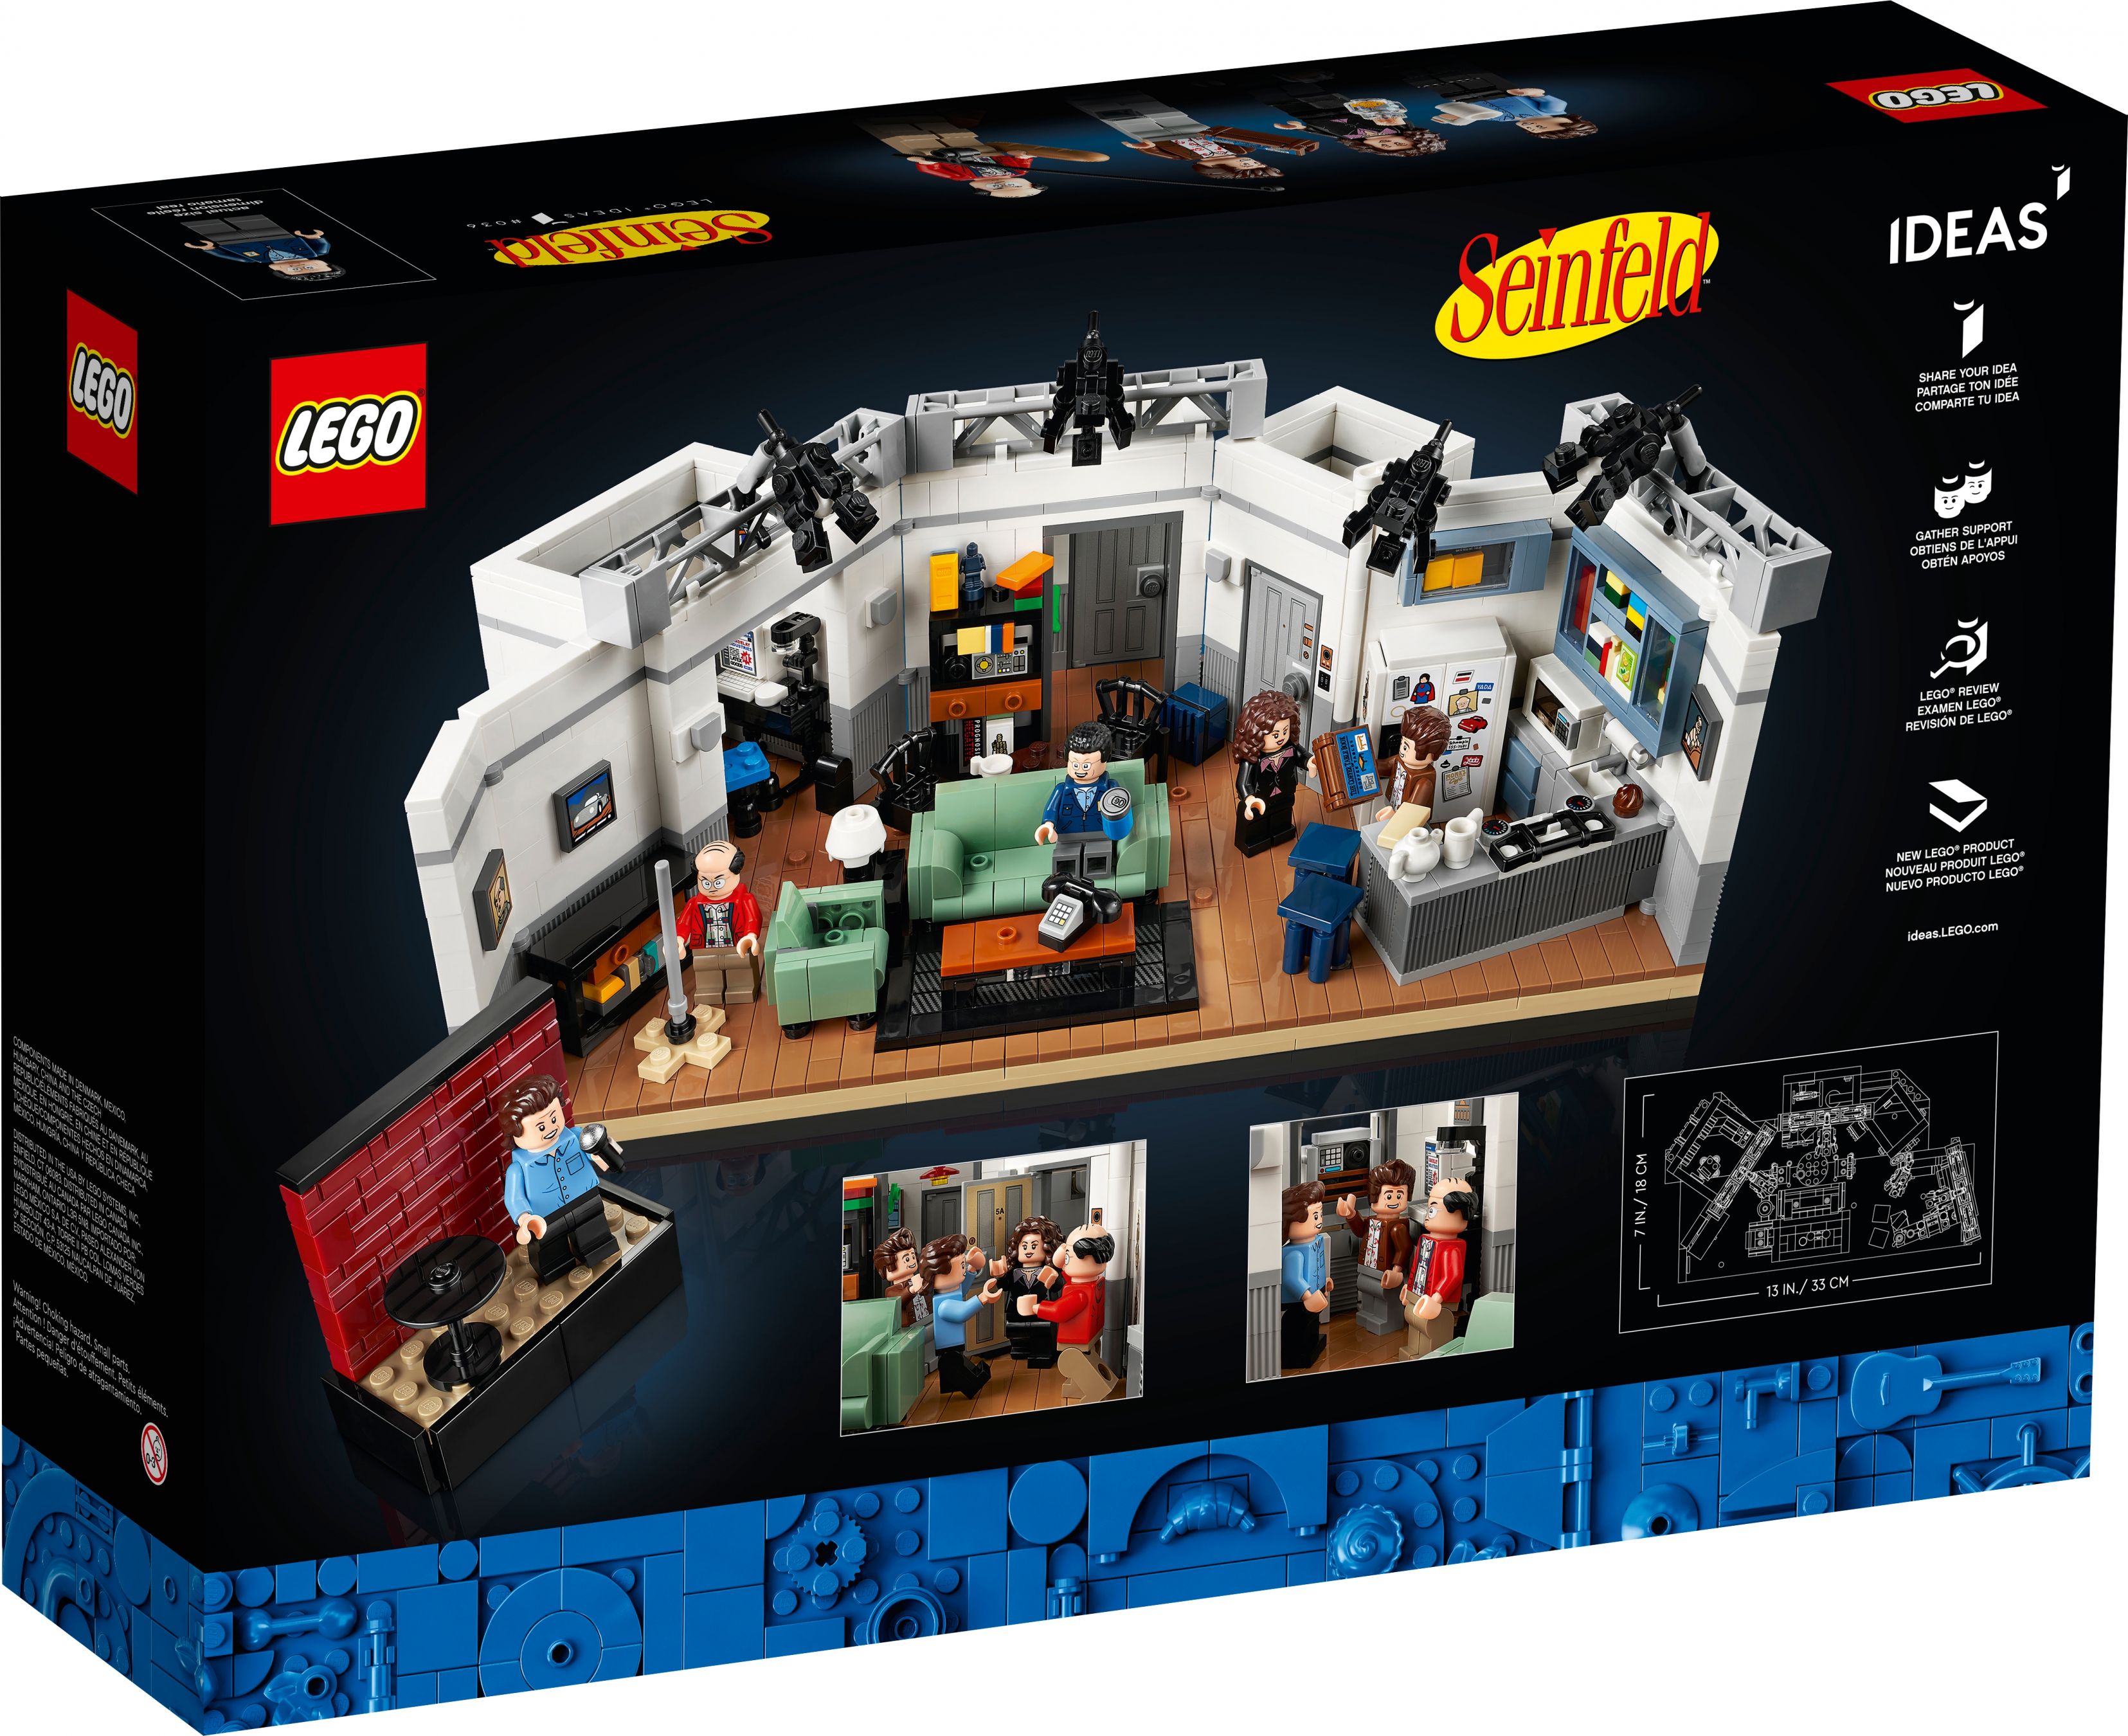 LEGO Ideas 21328 Seinfeld LEGO_21328_box5_v39.jpg